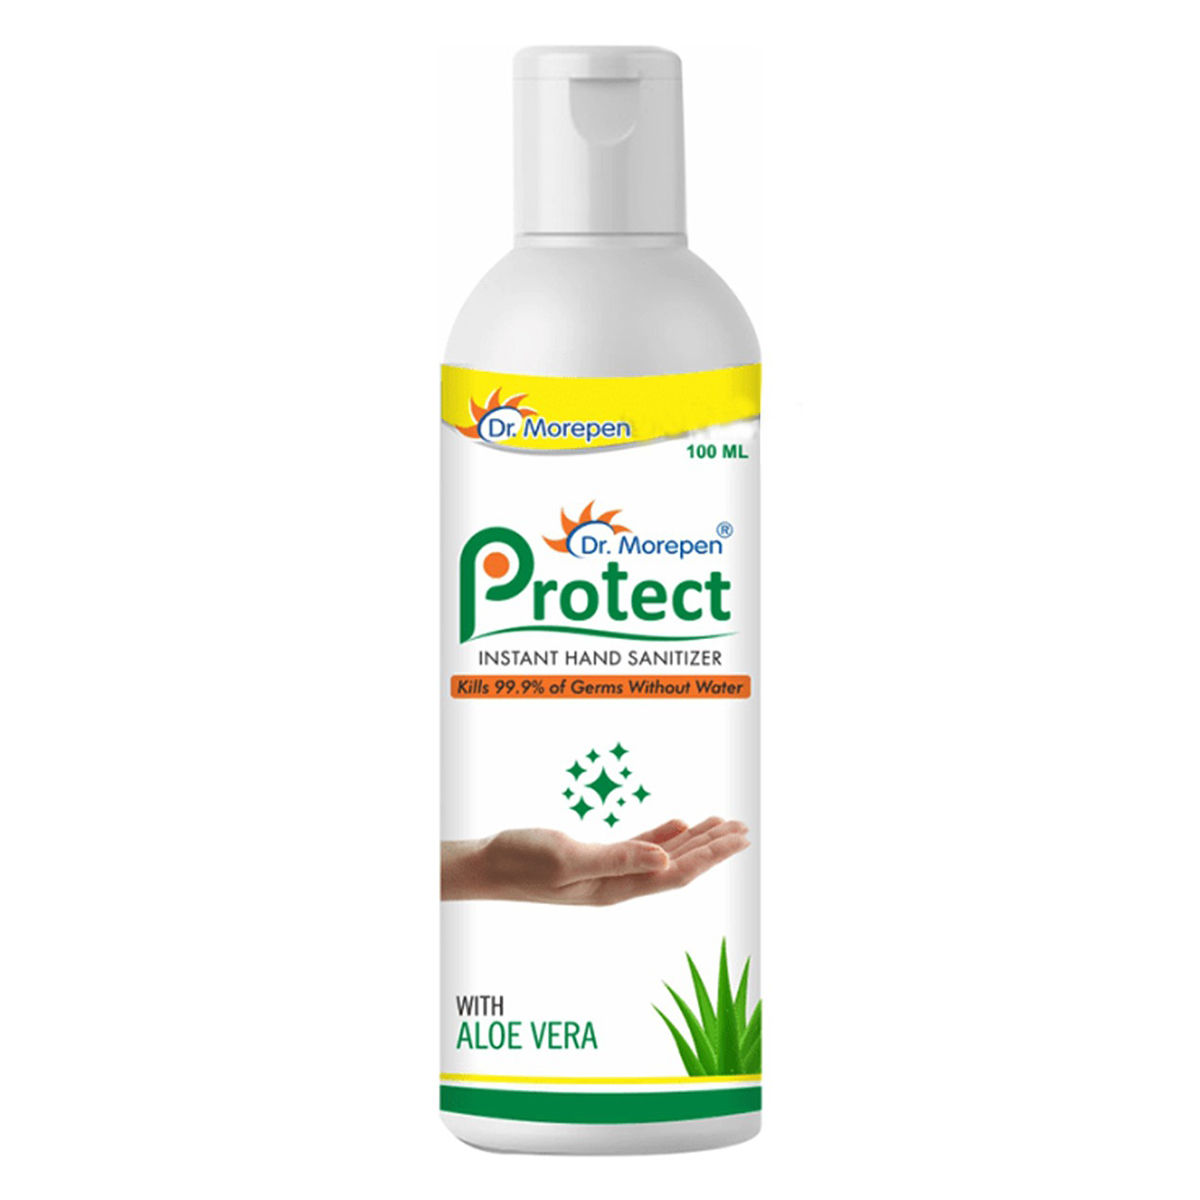 Buy Dr.Morphen Protect Aloe Vera Instant Hand Sanitizer, 100 ml Online